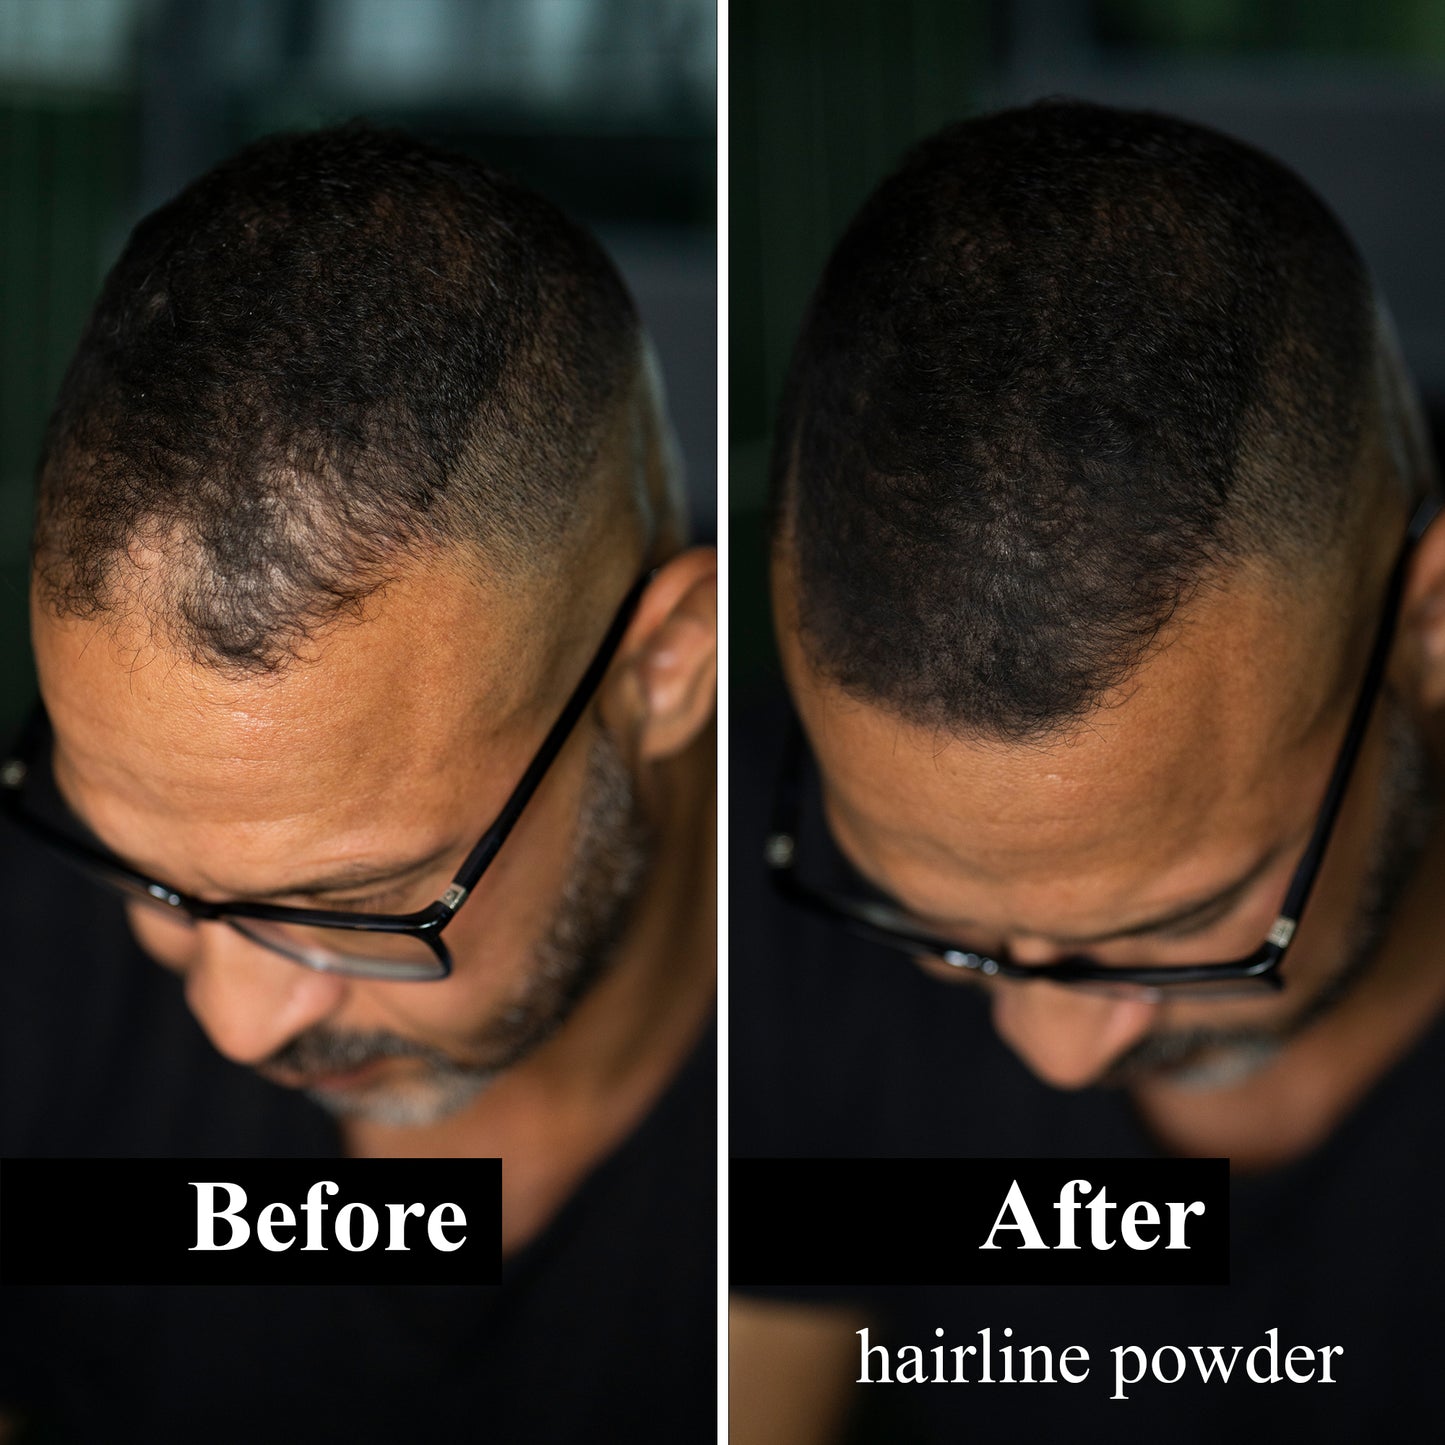 Hairline Powder - setting powder